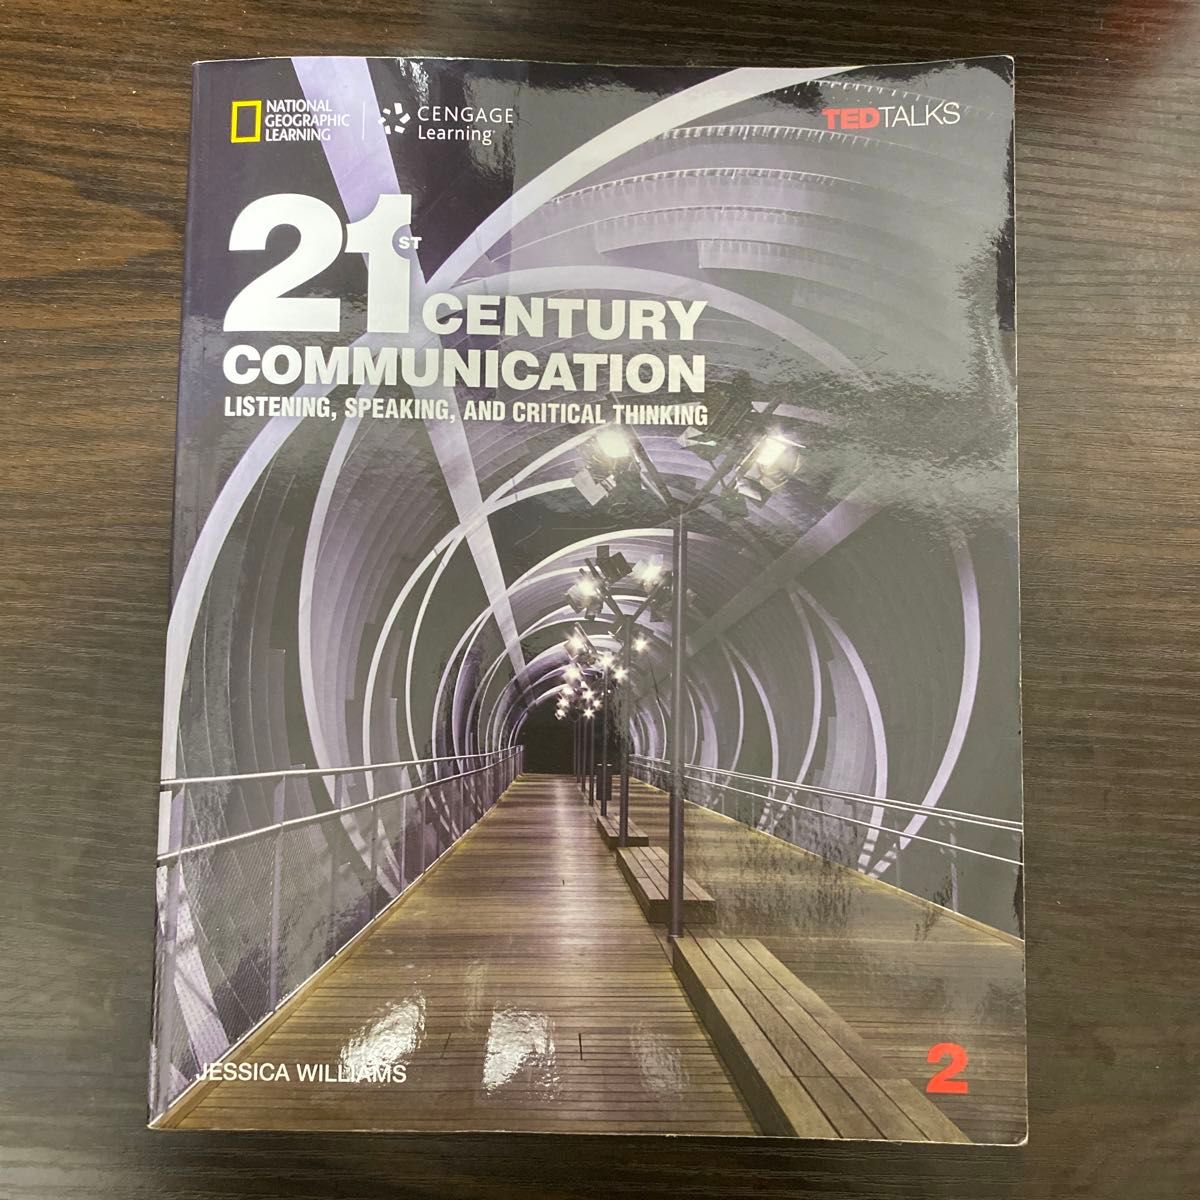 21 century communication Ted talks 教科書